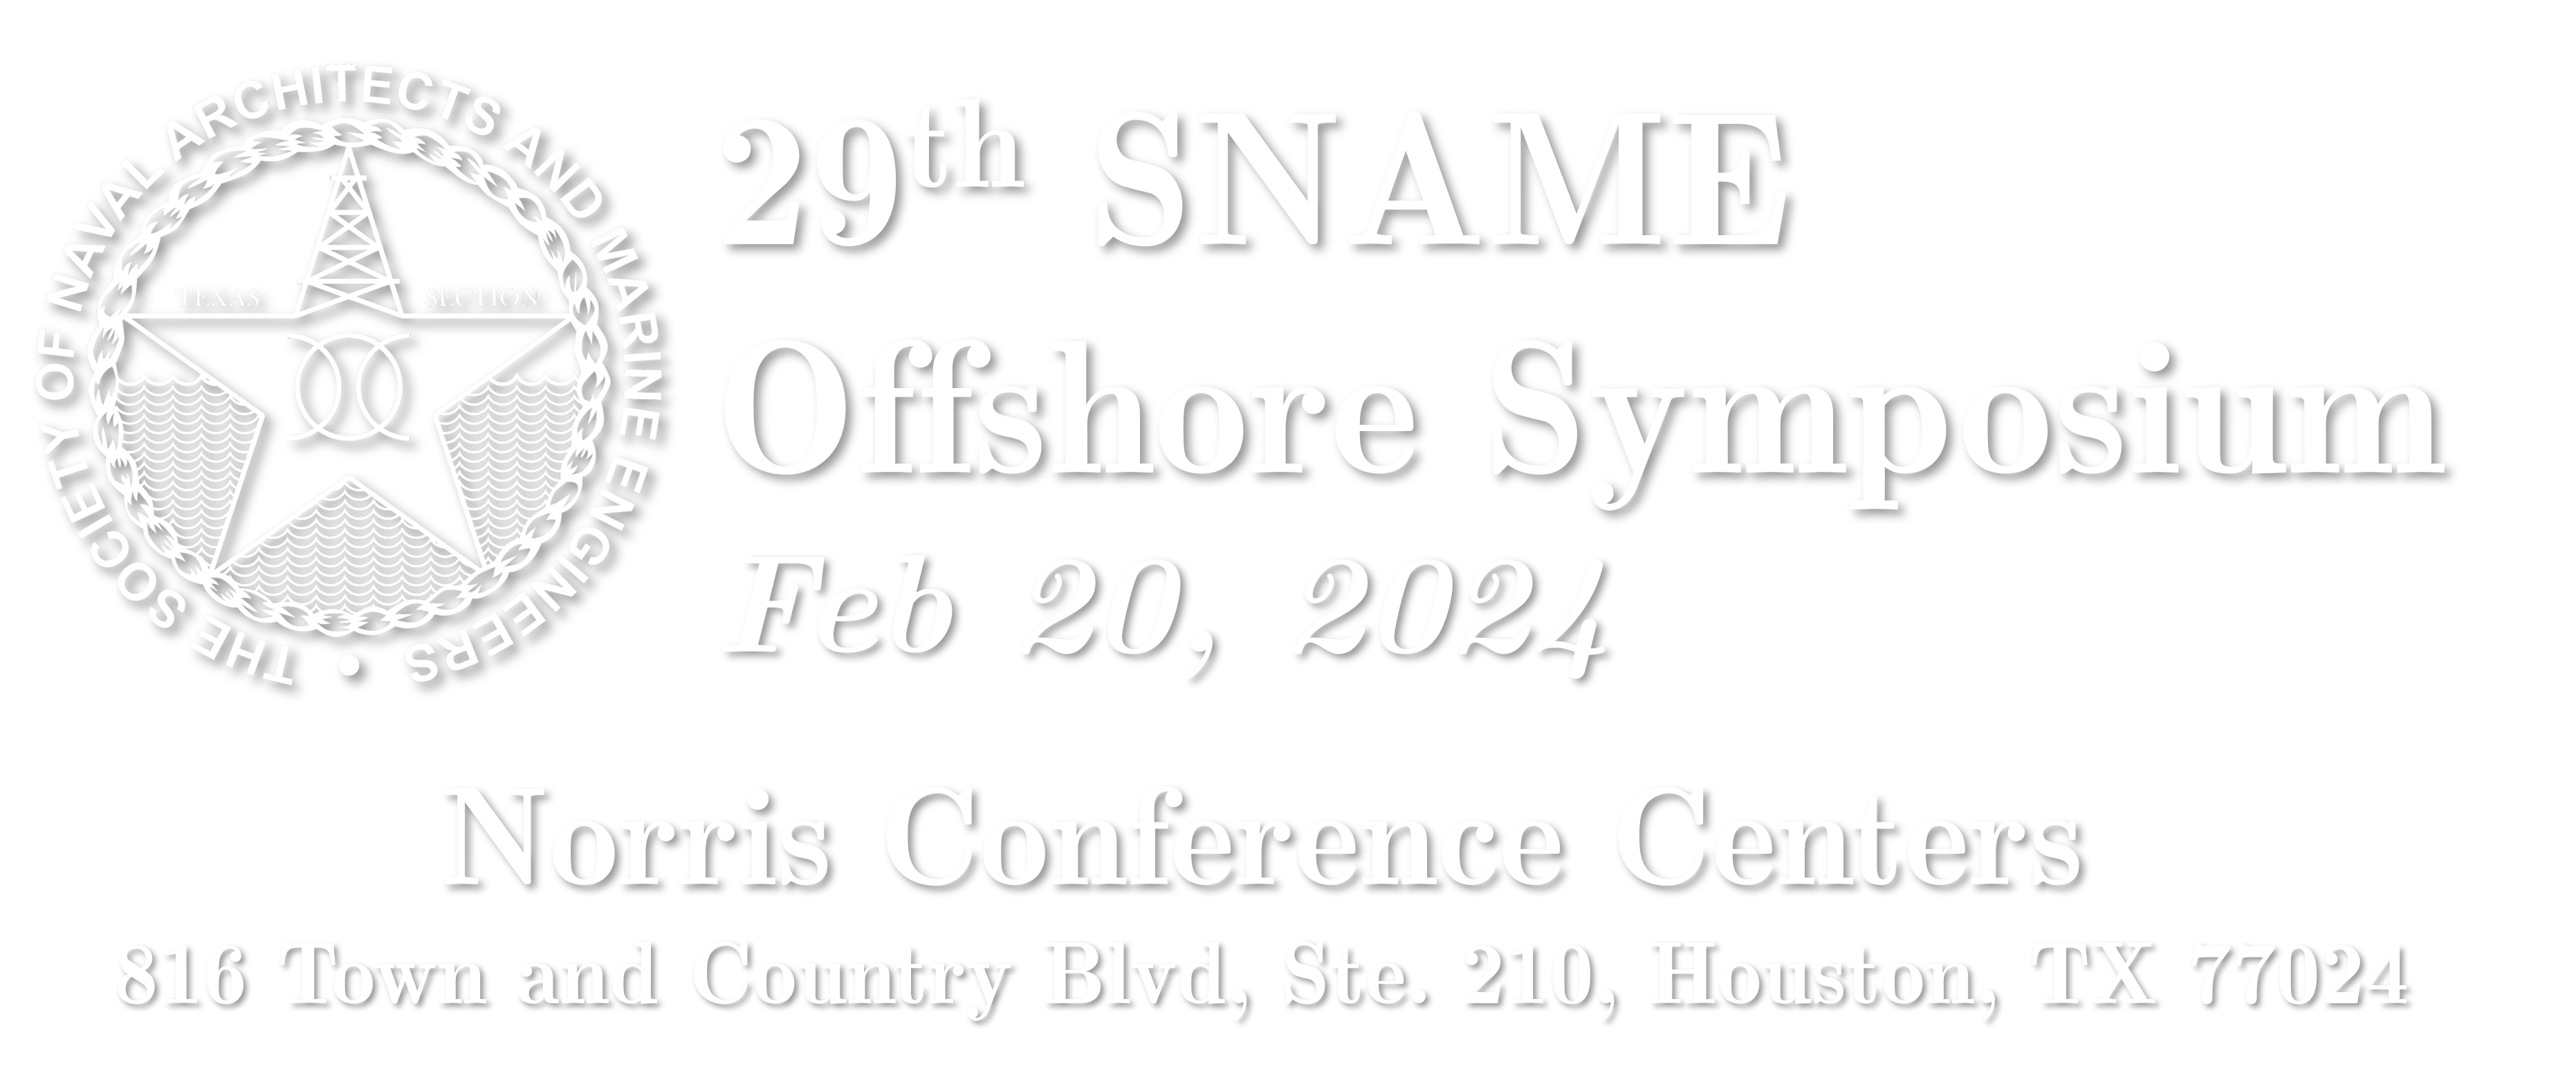 Account SNAME Offshore Symposium